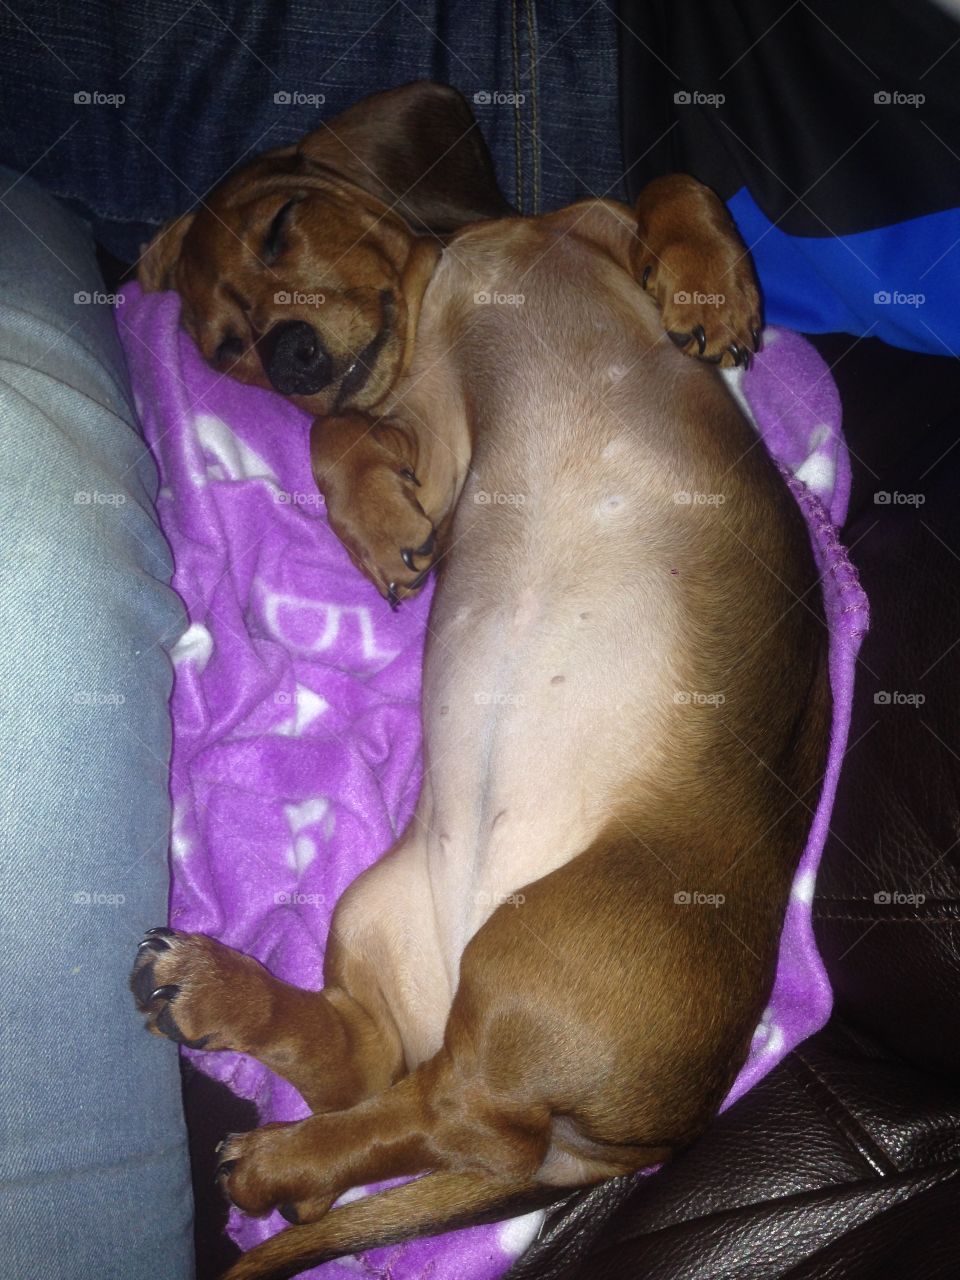 Dachshund asleep in dog bed